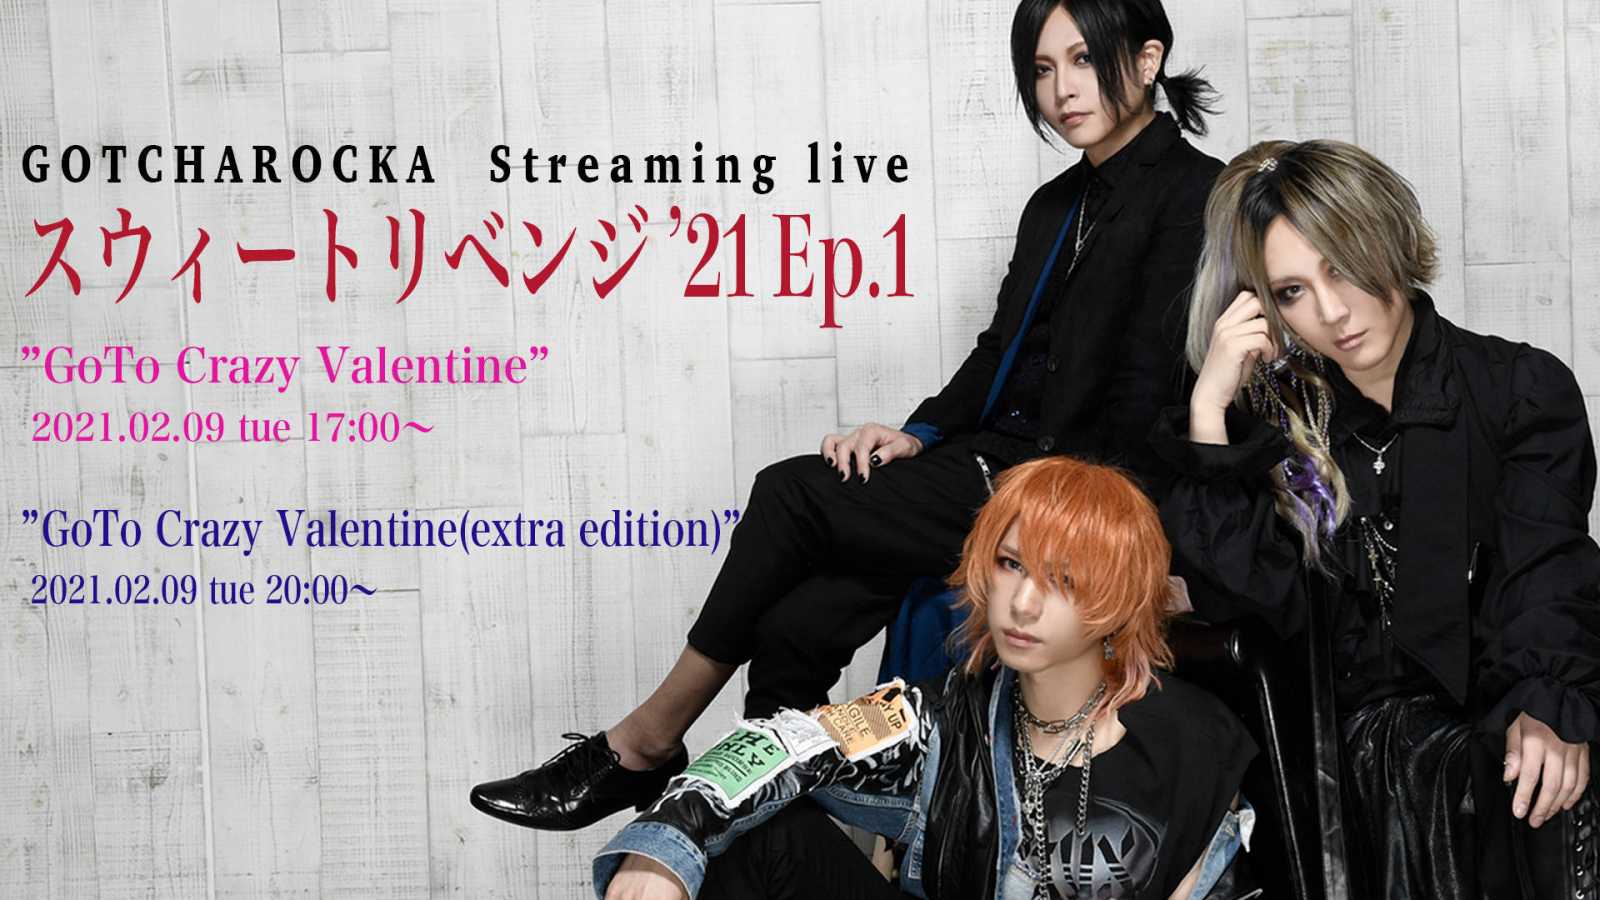 GOTCHAROCKA to Live Stream Two-Part Event "GoTo Crazy Valentine" © GOD CHILD RECORDS. All rights reserved.